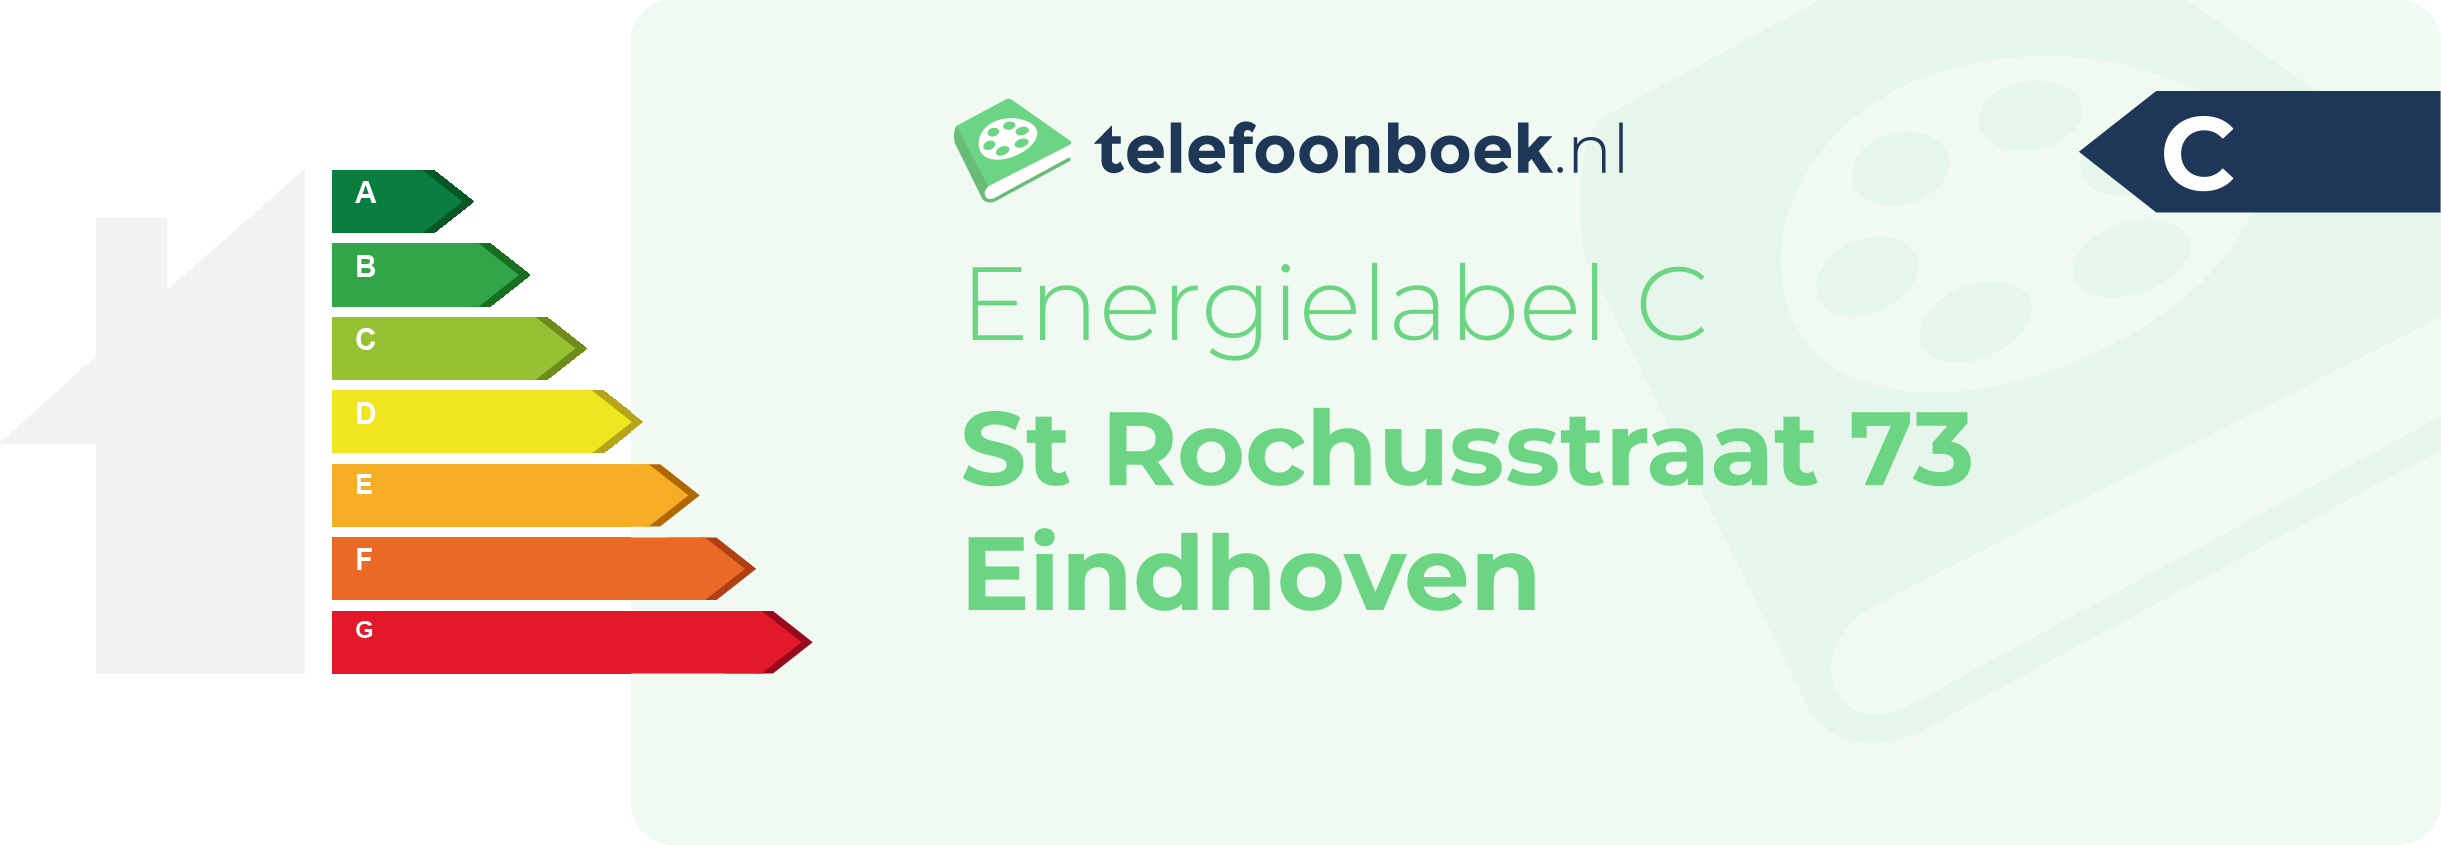 Energielabel St Rochusstraat 73 Eindhoven